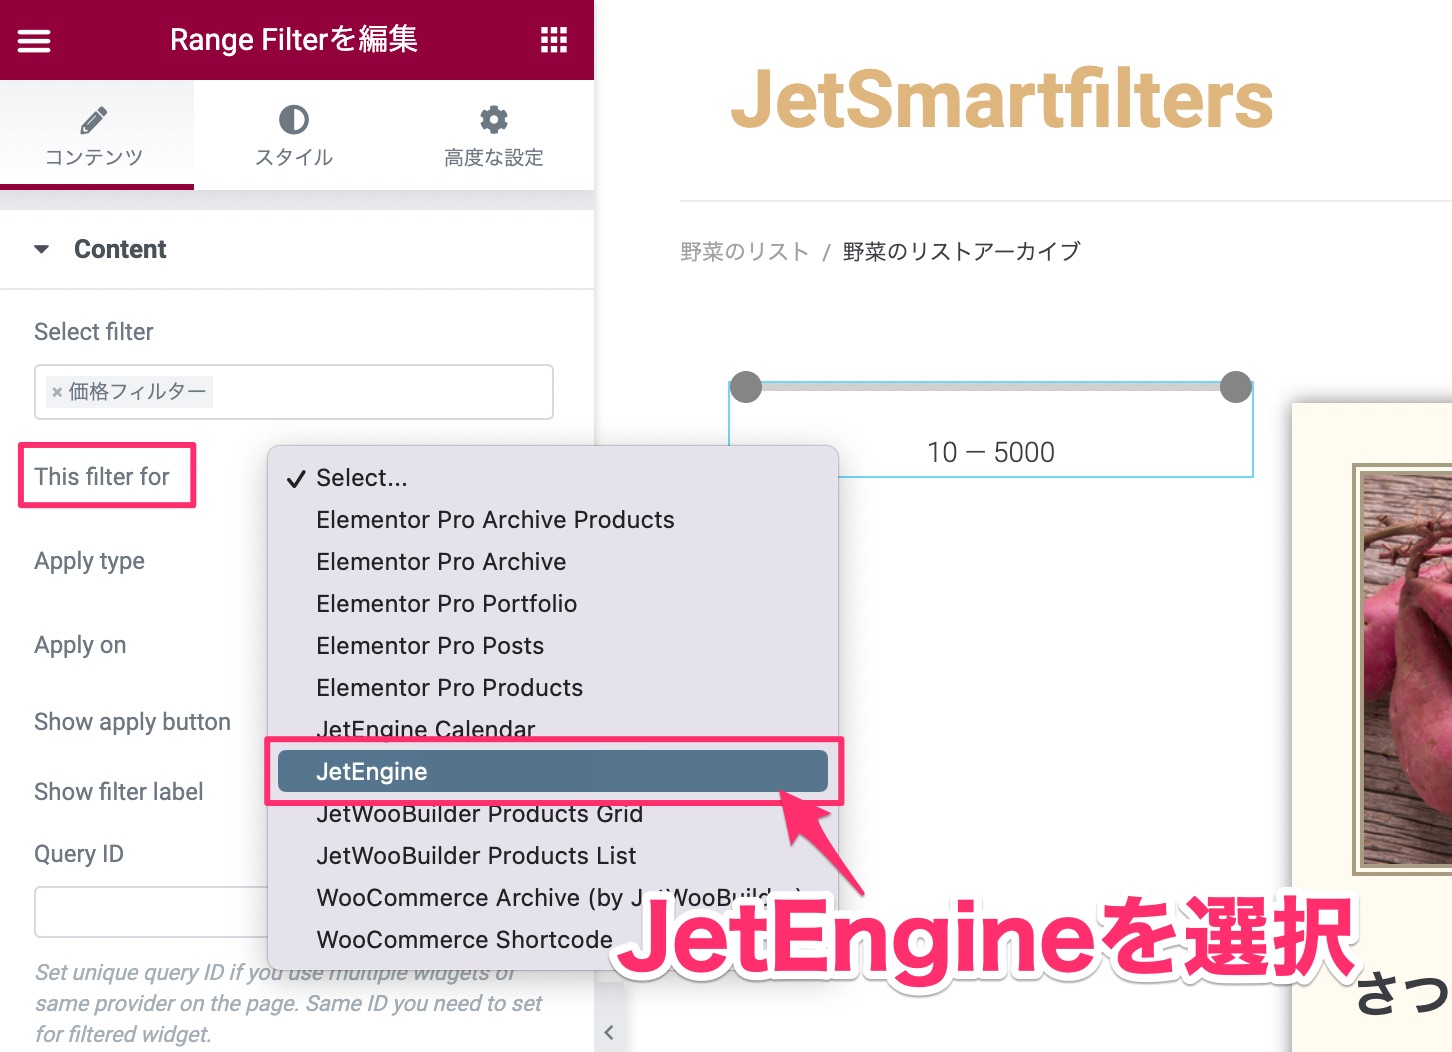 『This filter for』で『JetEngine』を選択